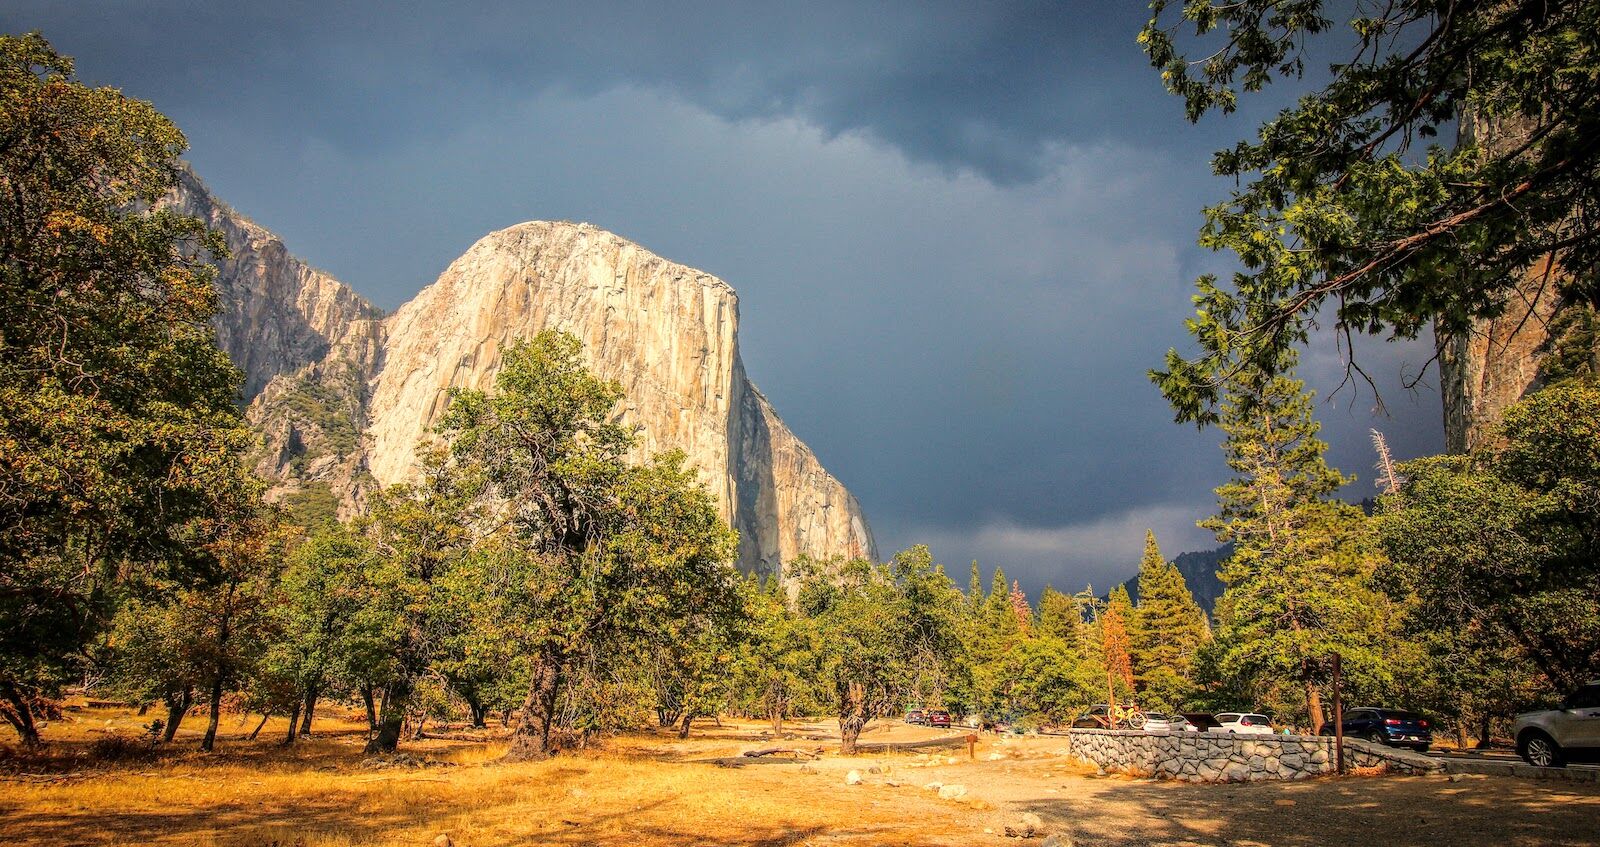 El Cap in the famous Yosemite Valley